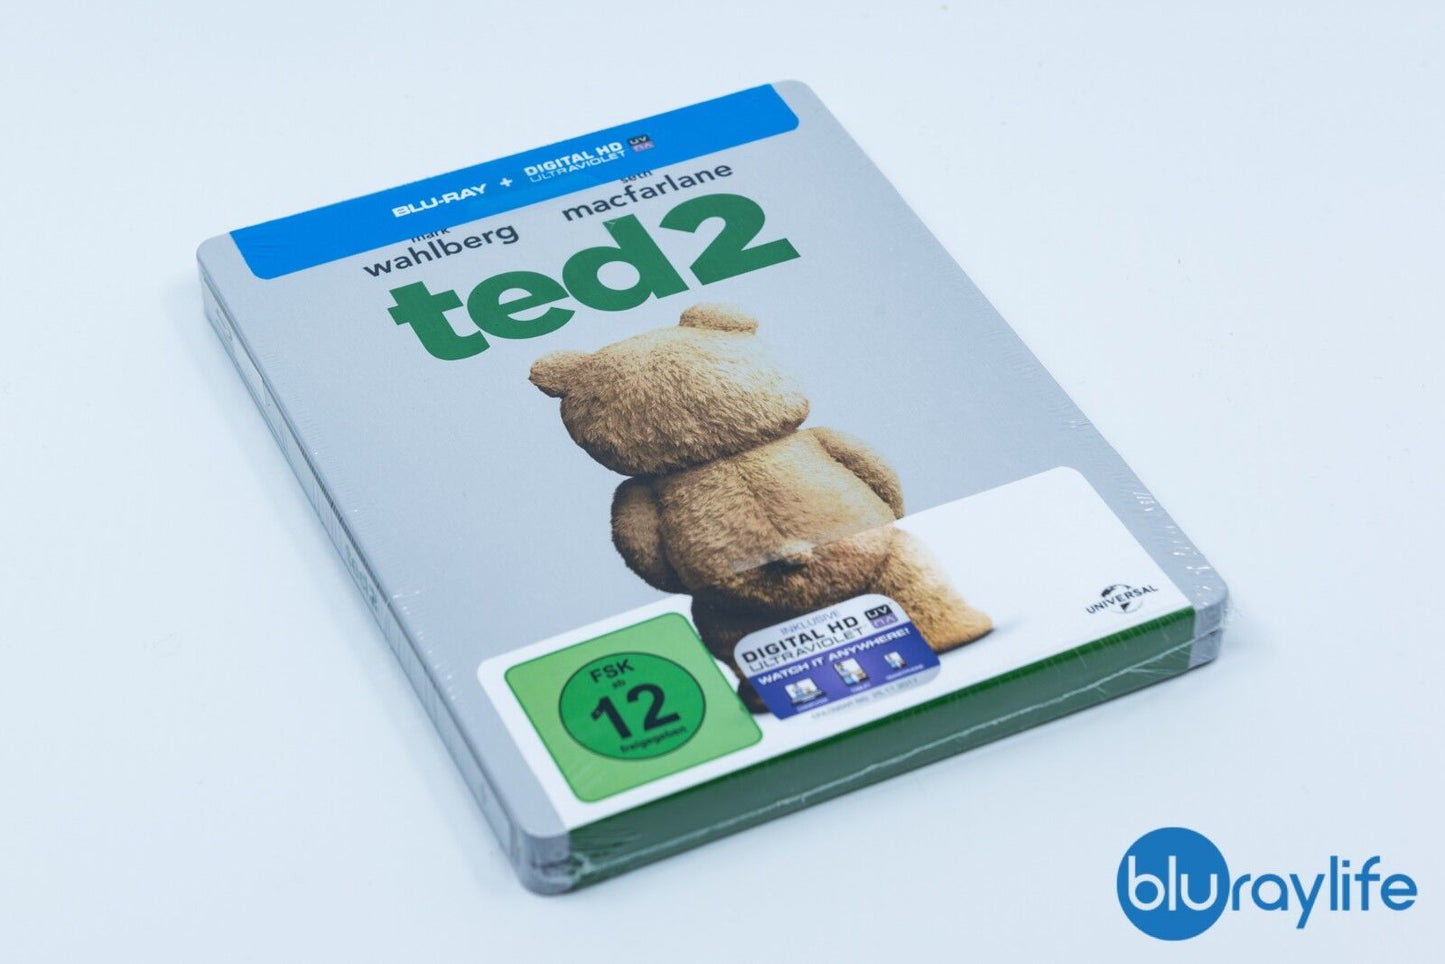 Ted 2 (Back Version) Blu-ray SteelBook Limited Edition W/ Digital Amazon Germany